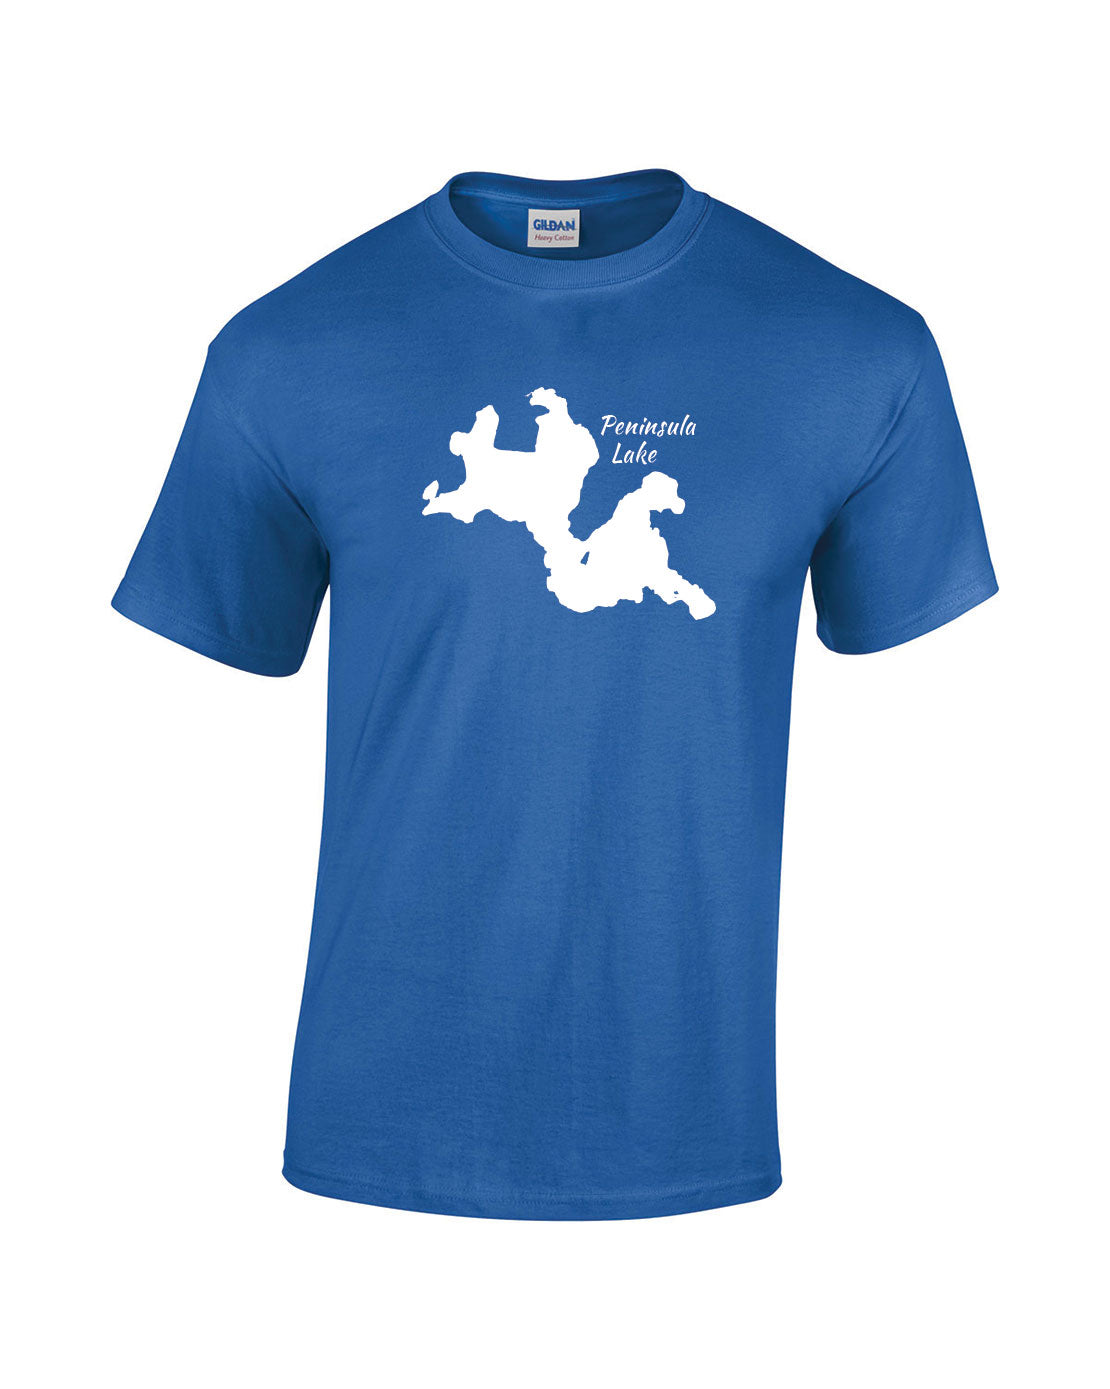 Peninsula Lake T-Shirt